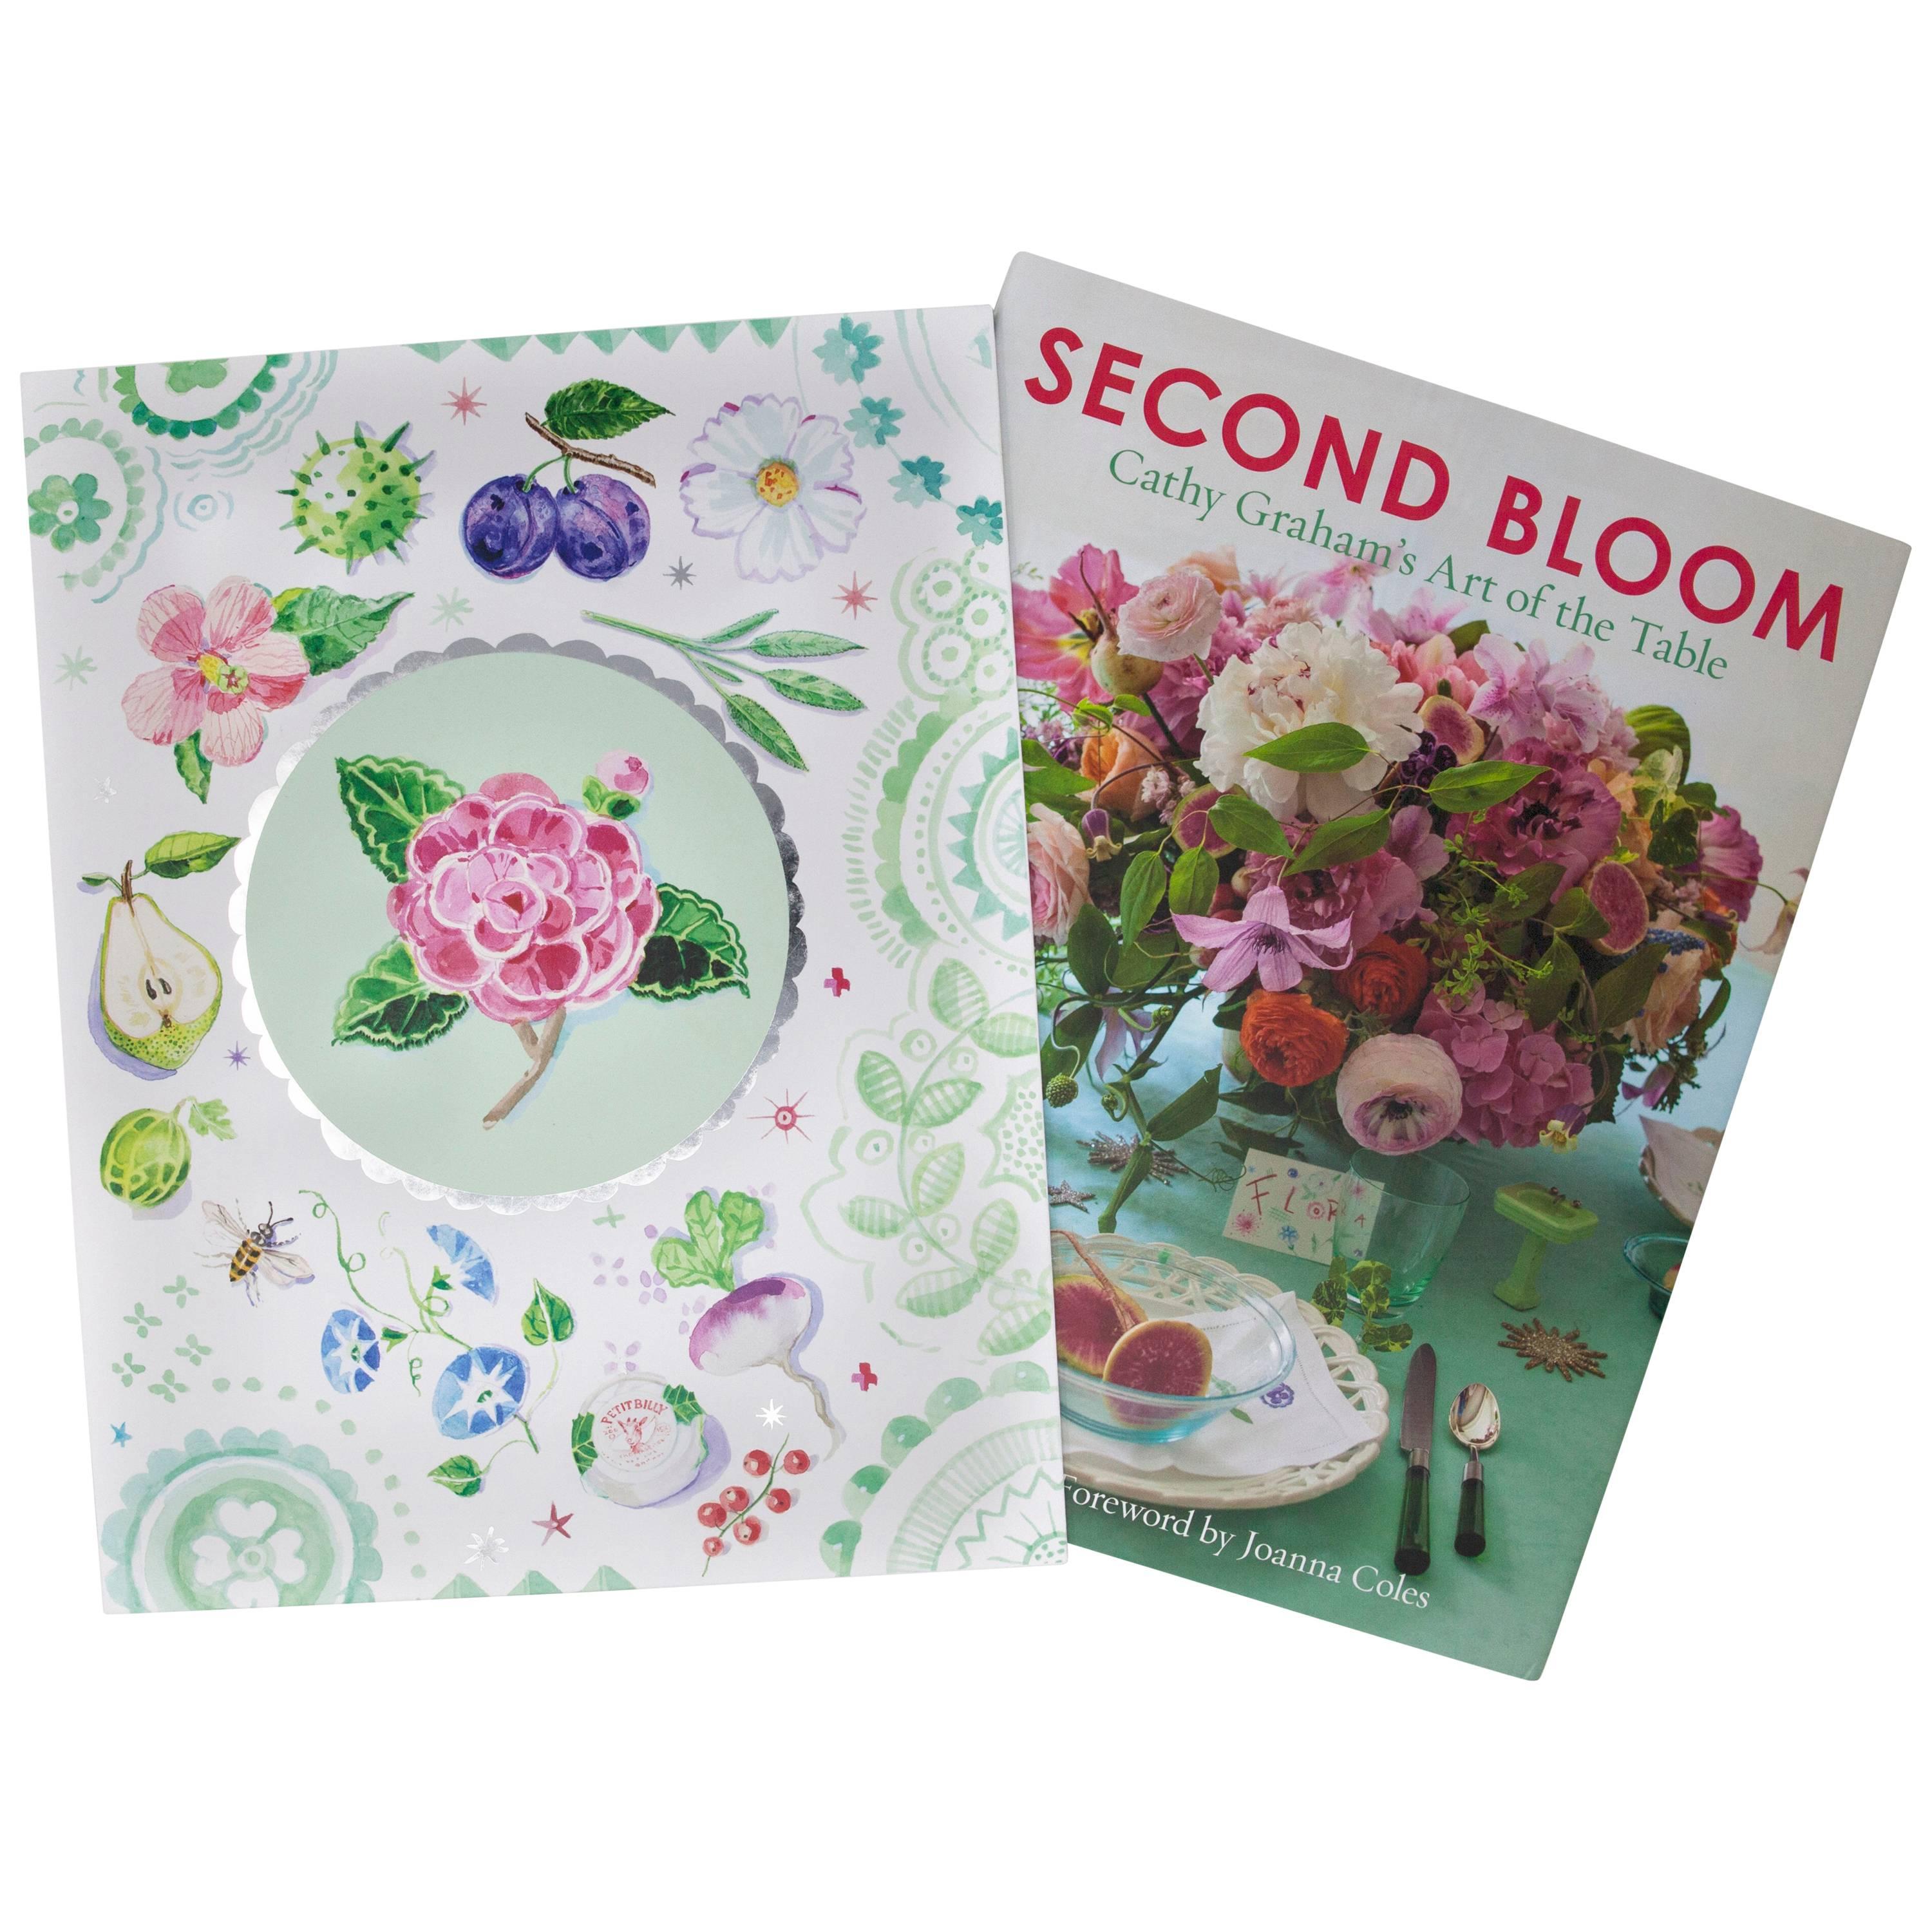 Cathy Graham Custom Designed Slipcase Edition of ‘Second Bloom'